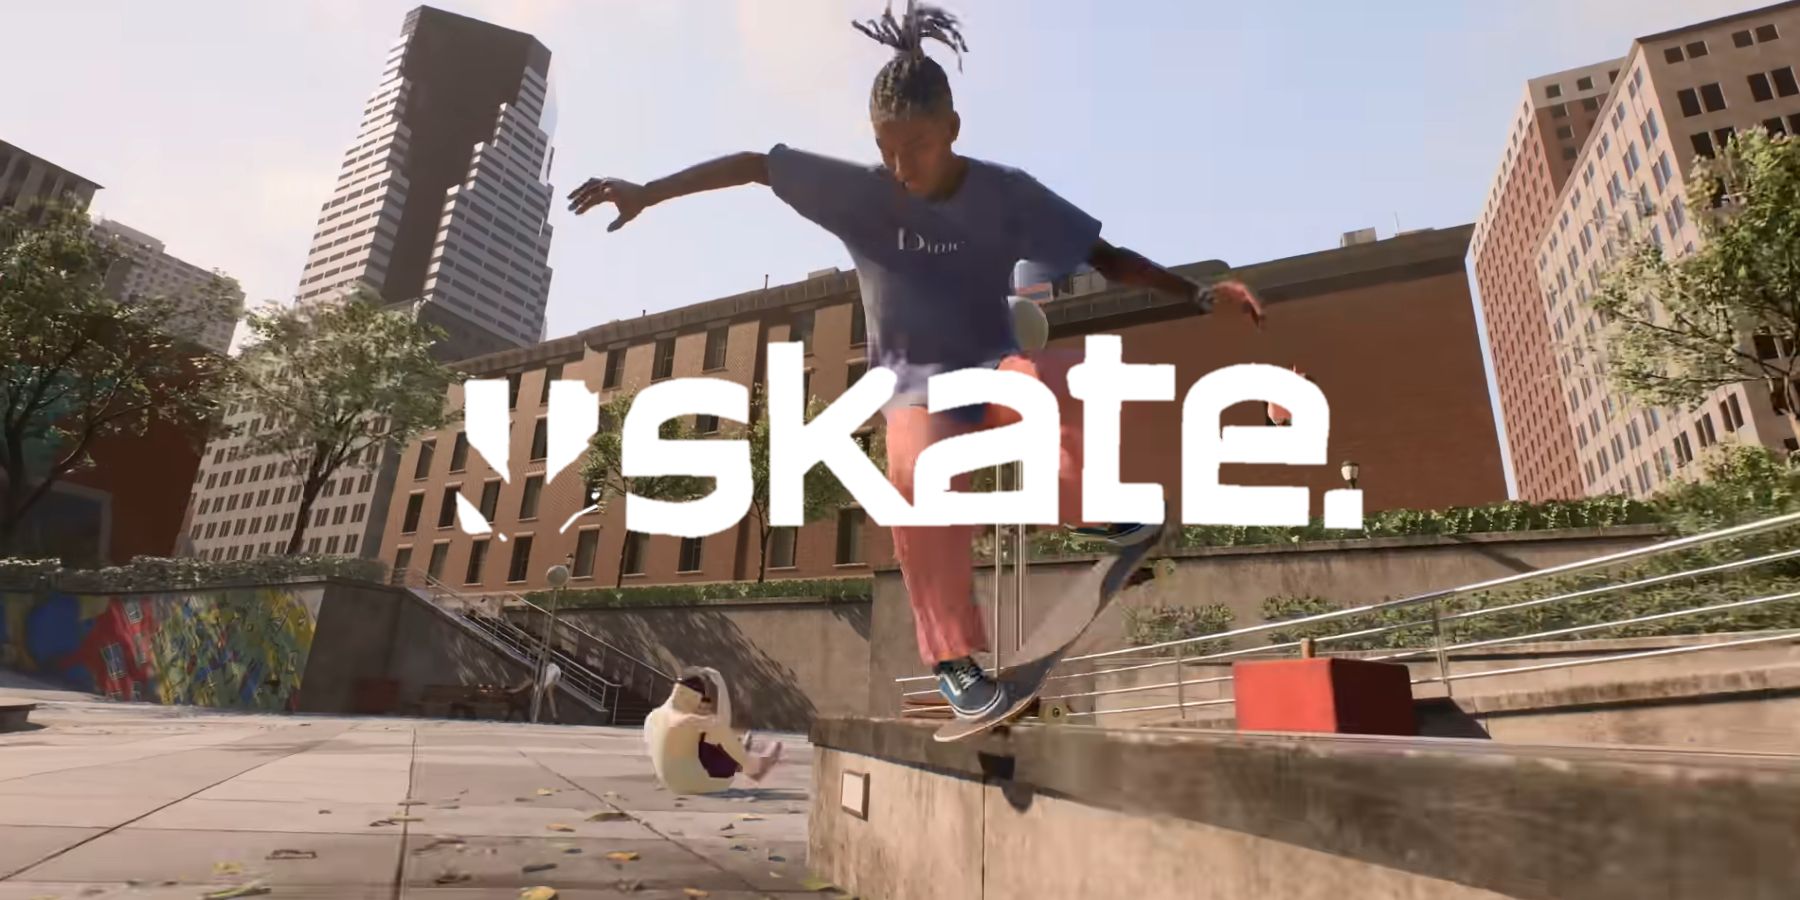 Skate 4 release date rumours, playtest, platforms, gameplay